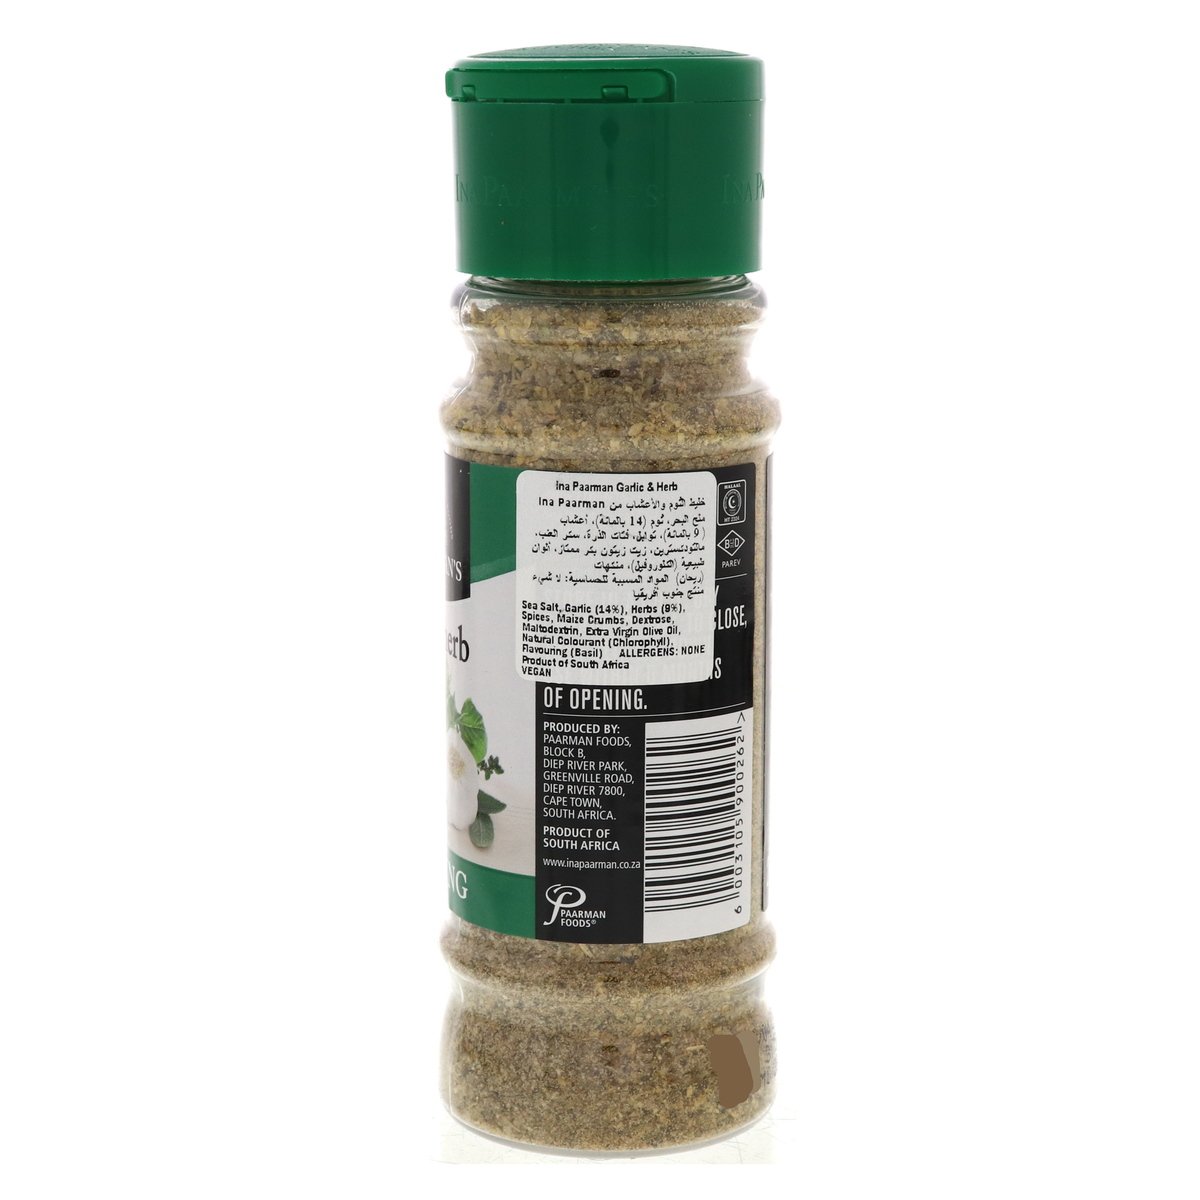 Ina Paarman's Garlic And Herb Seasoning 200 ml